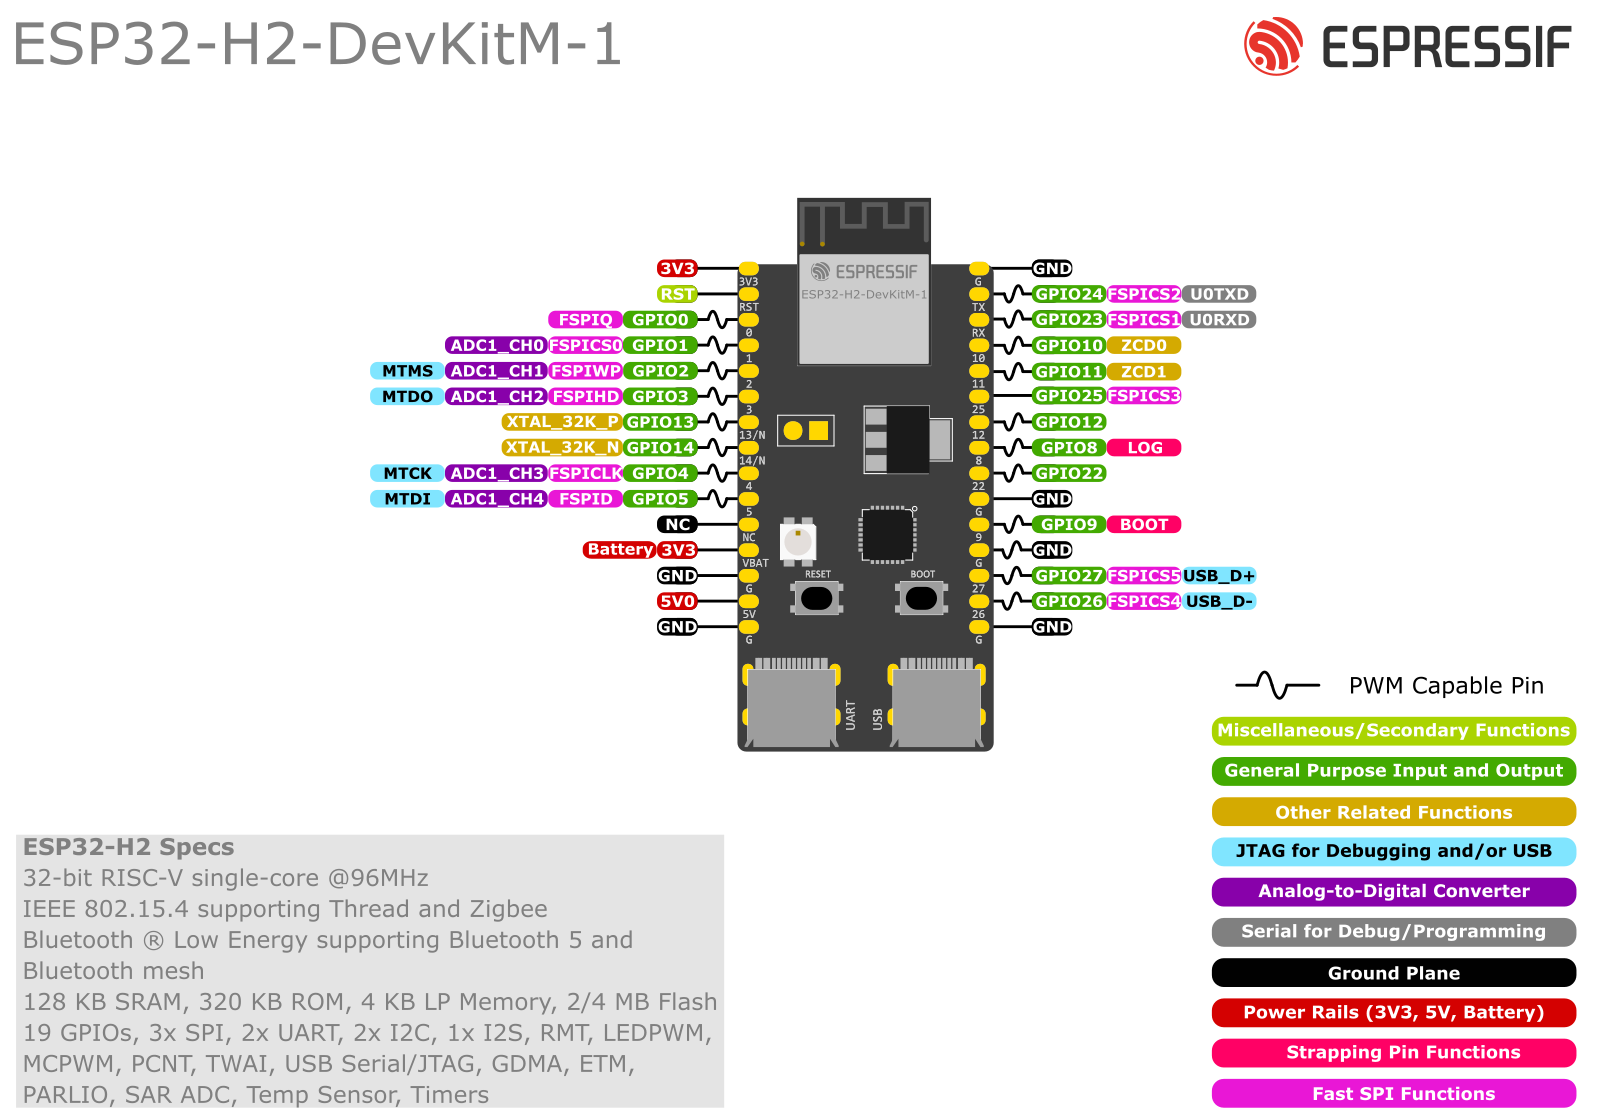 ESP32-H2-DevKitM-1 - 4 MB Flash